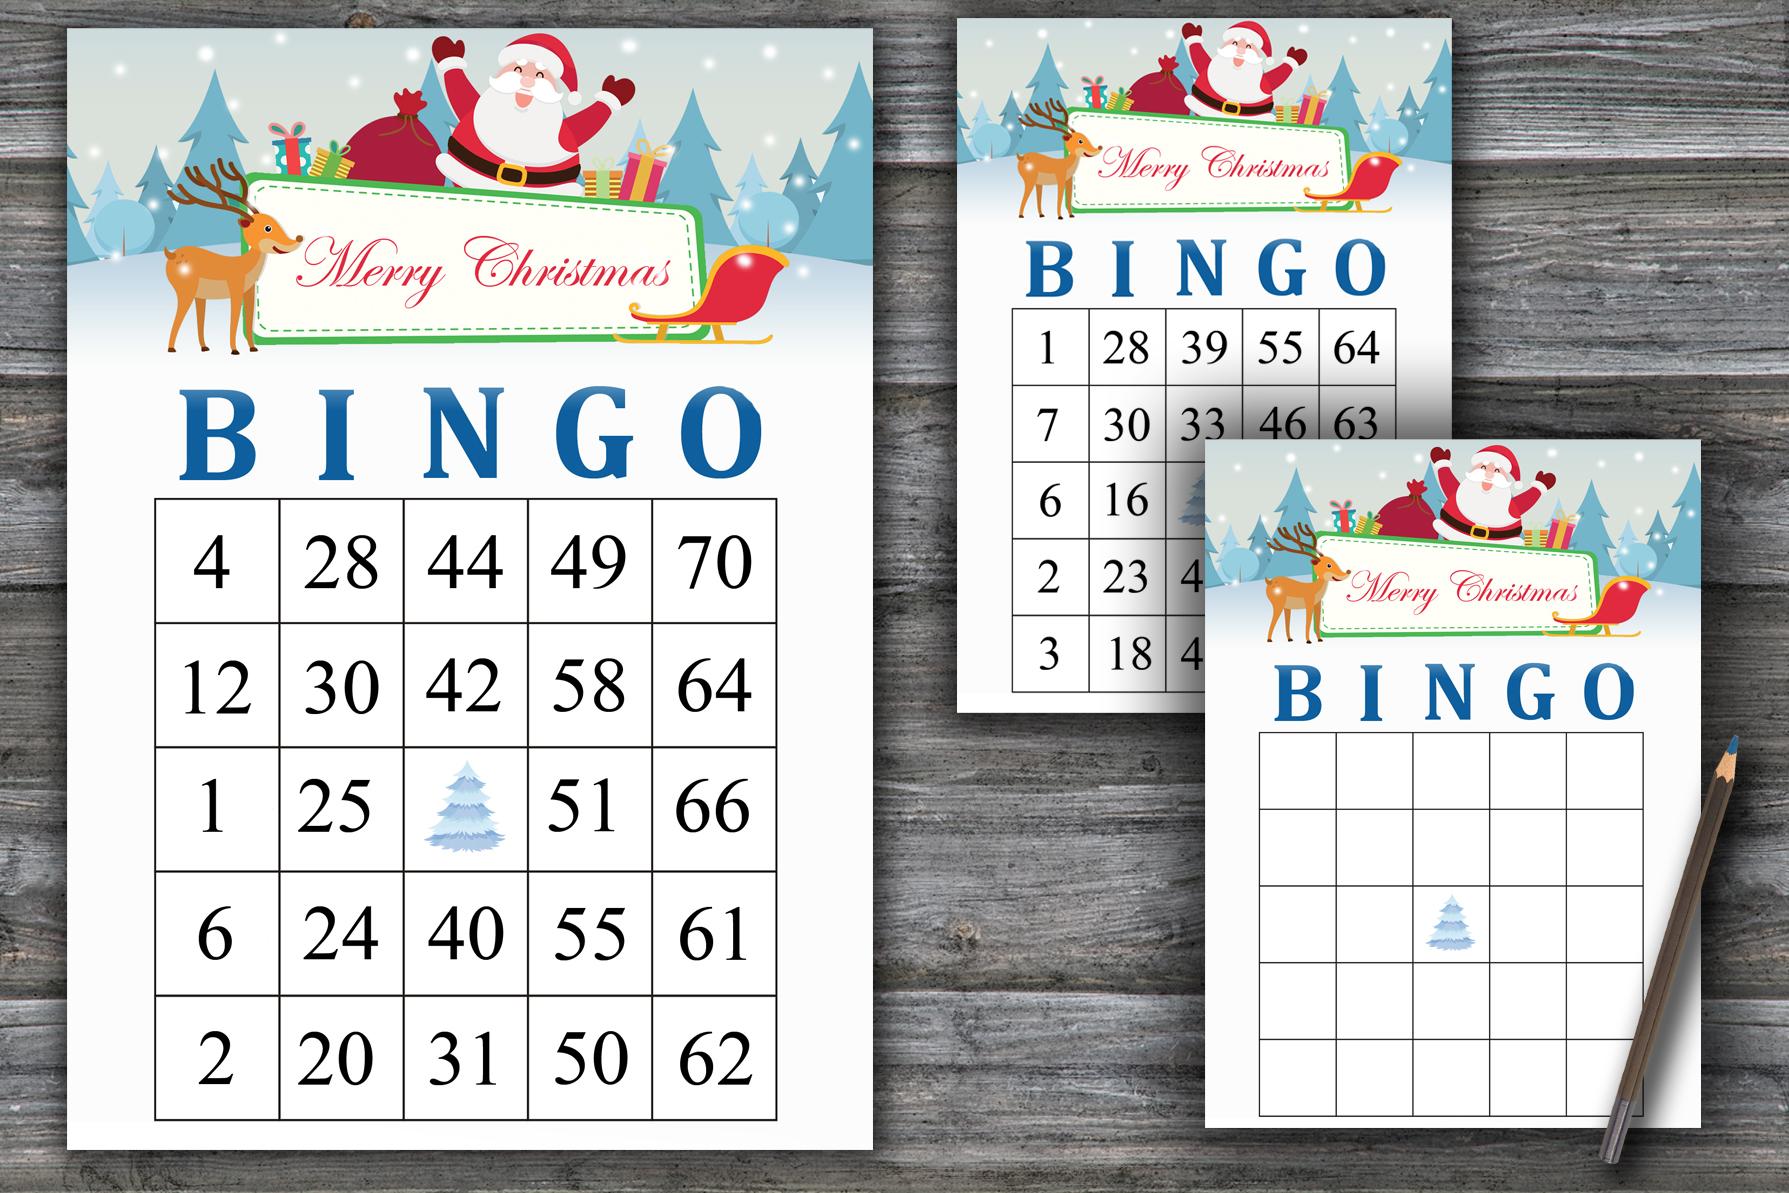 Happy santa claus bingo game,Merry christmas bingo card,Christmas bingo game,Christmas Party bingo,Holiday Bingo card,INSTANT DOWNLOAD